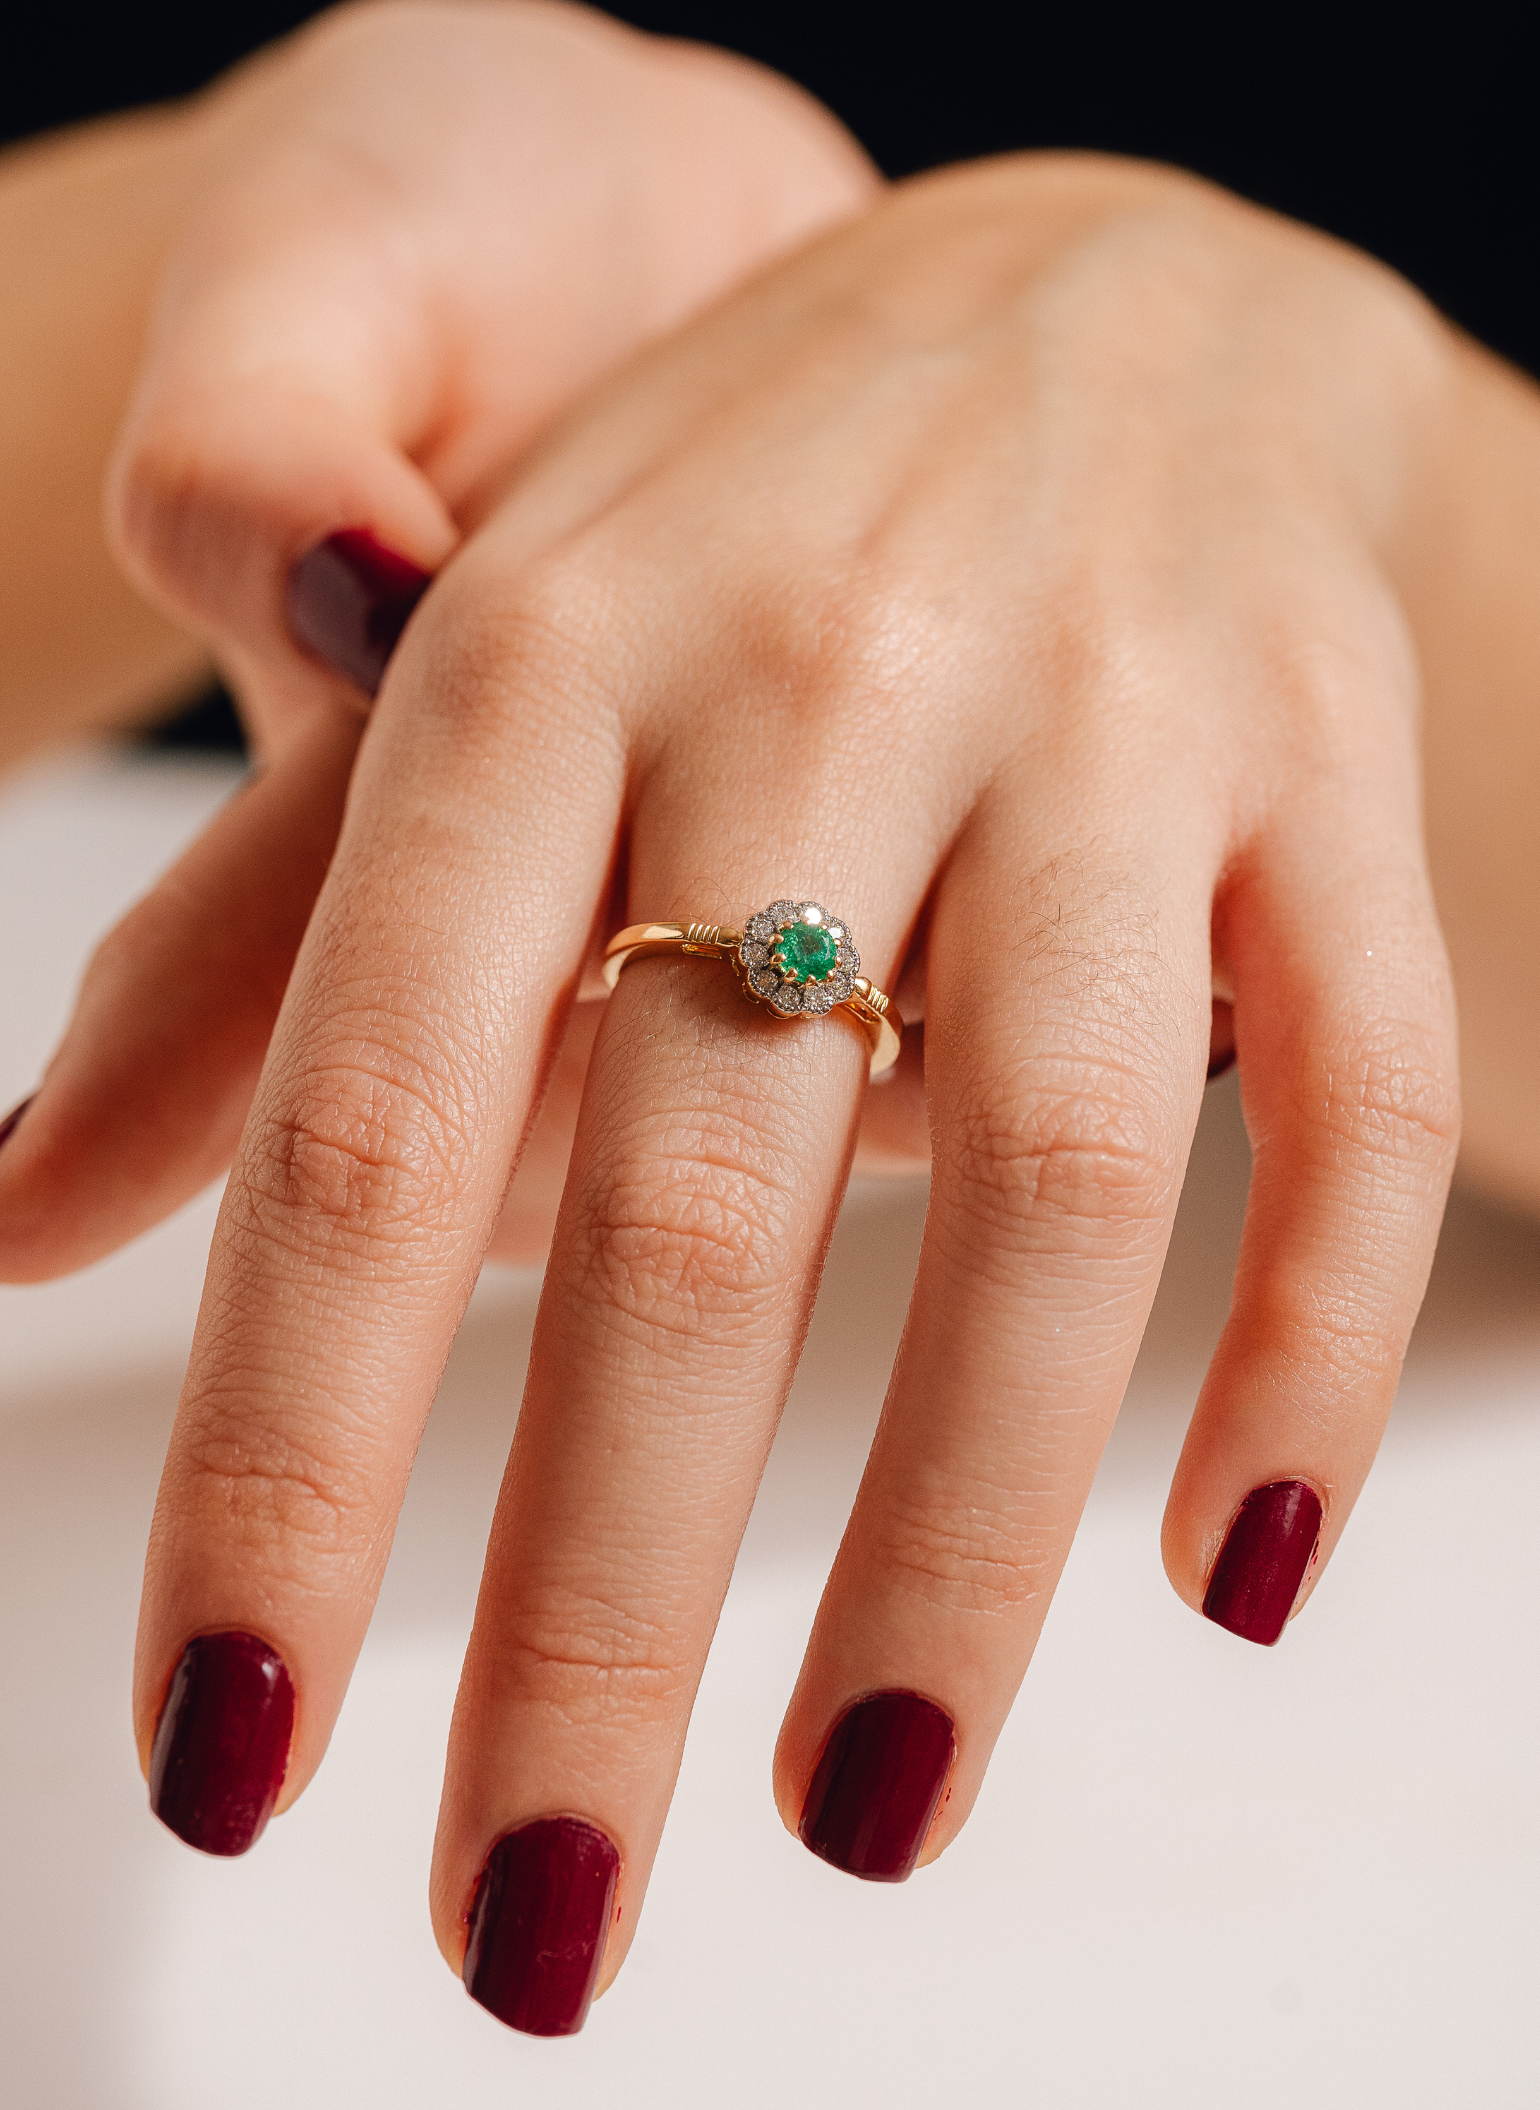 Diamond and Emerald Bird's Eye Ring